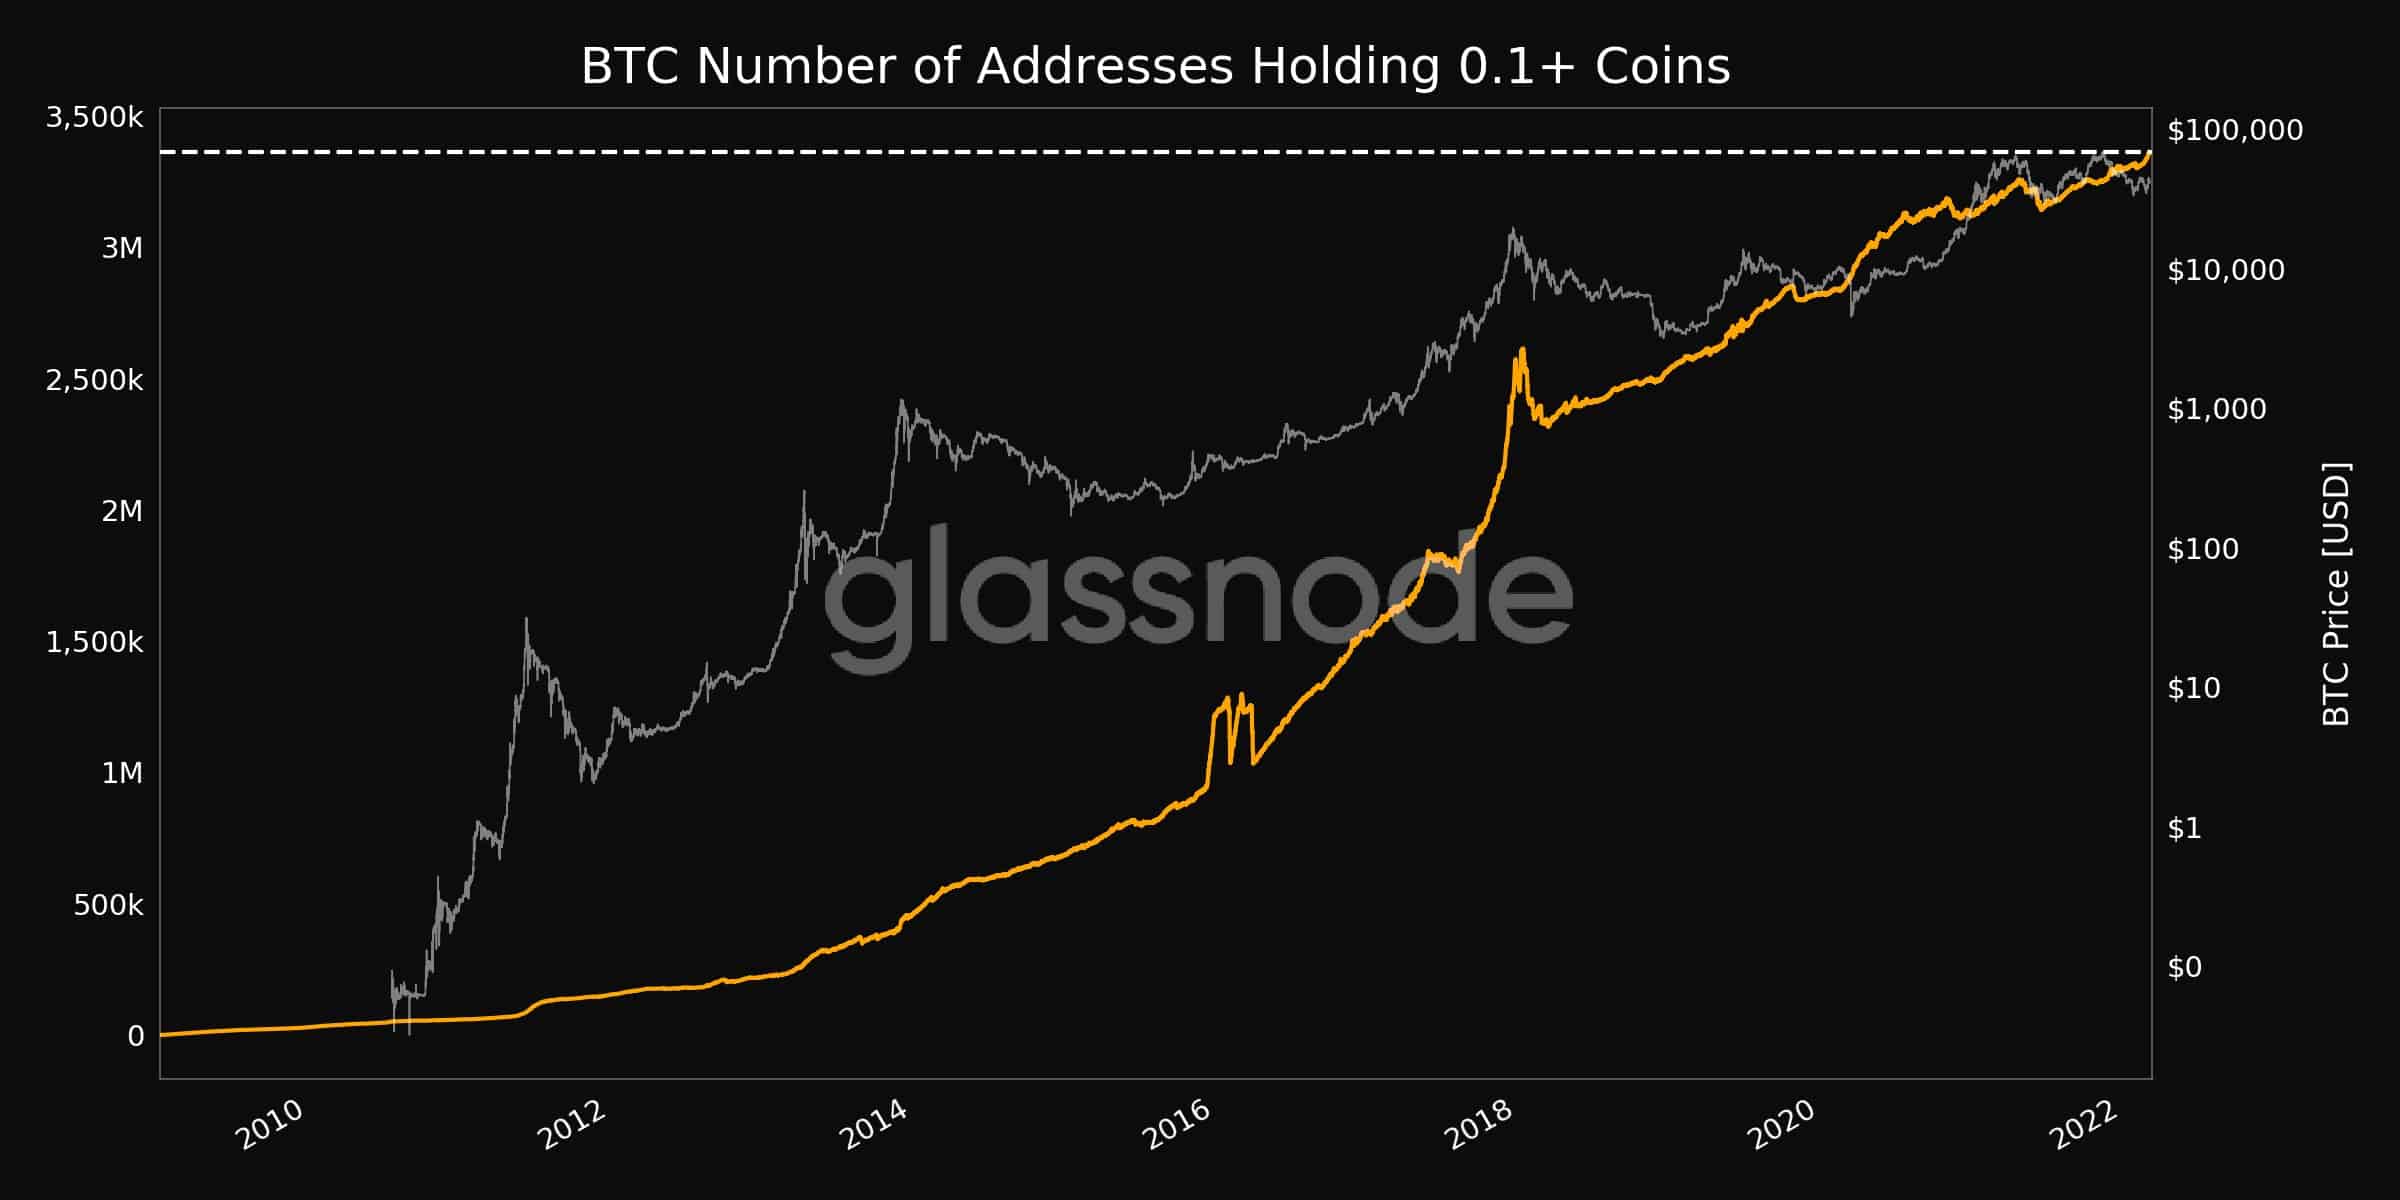 Bitcoin Addresses With 0.1+ BTC. Source: Glassnode